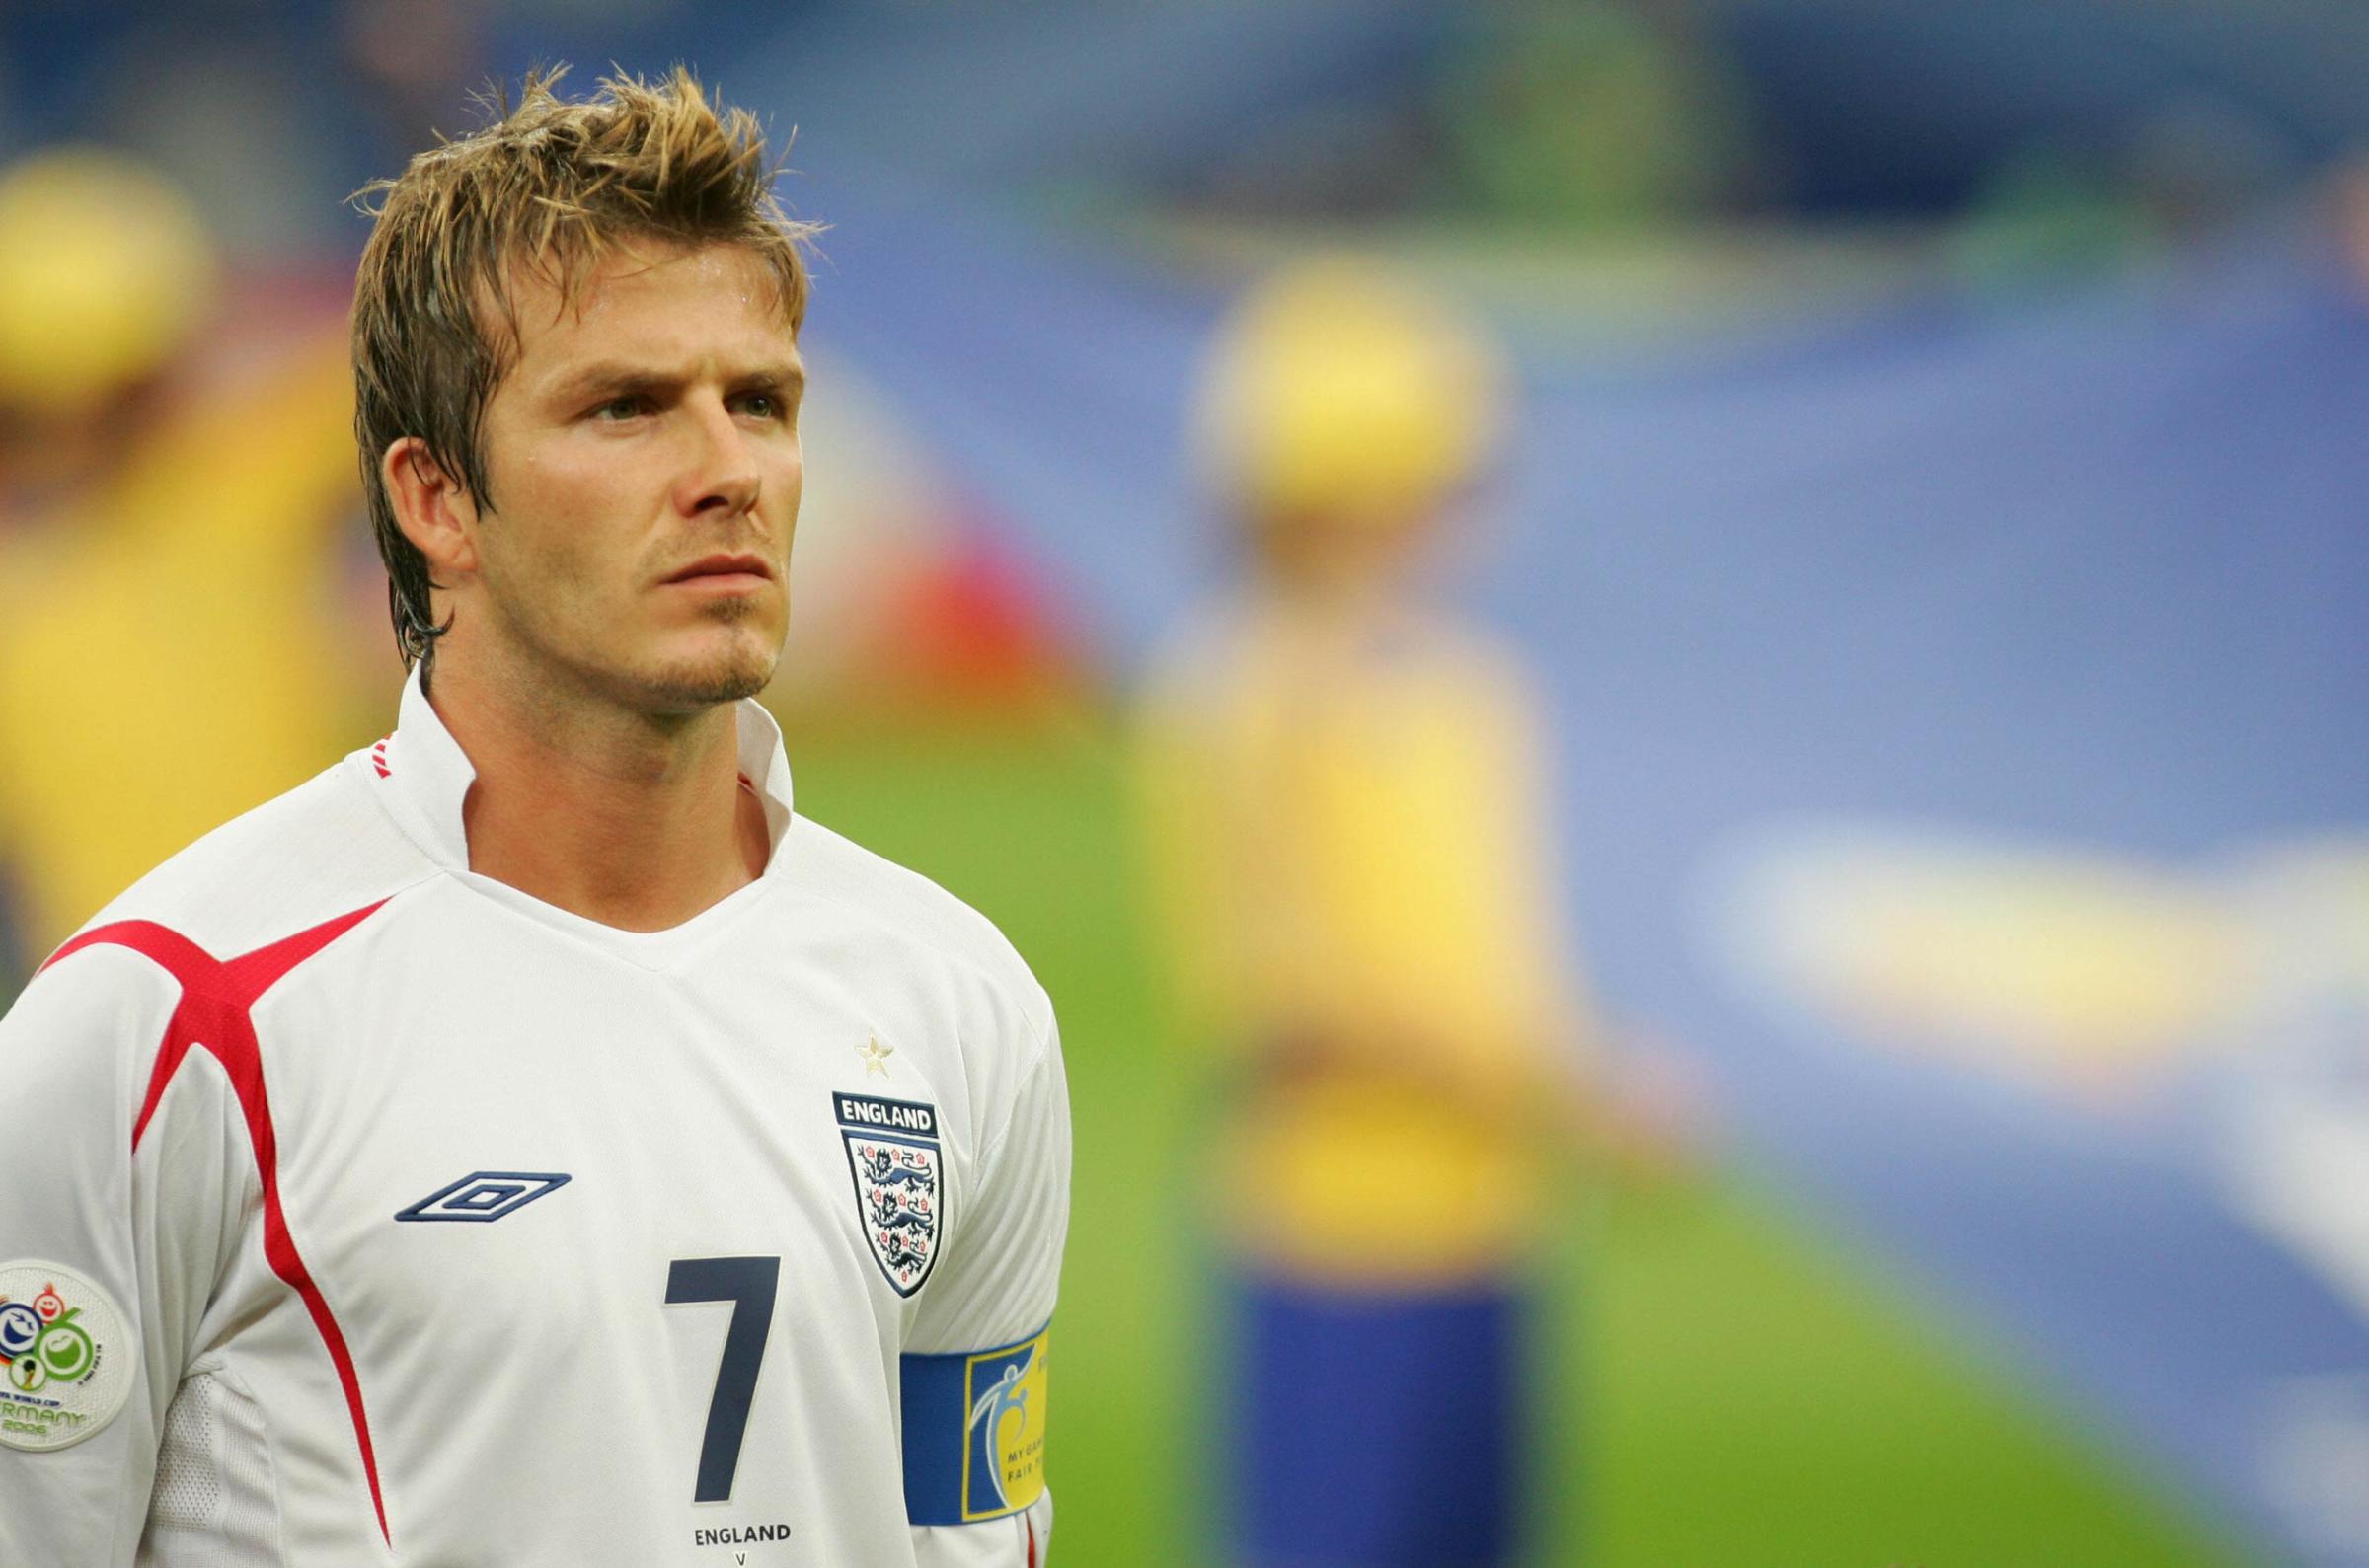 English midfielder and captain David Bec